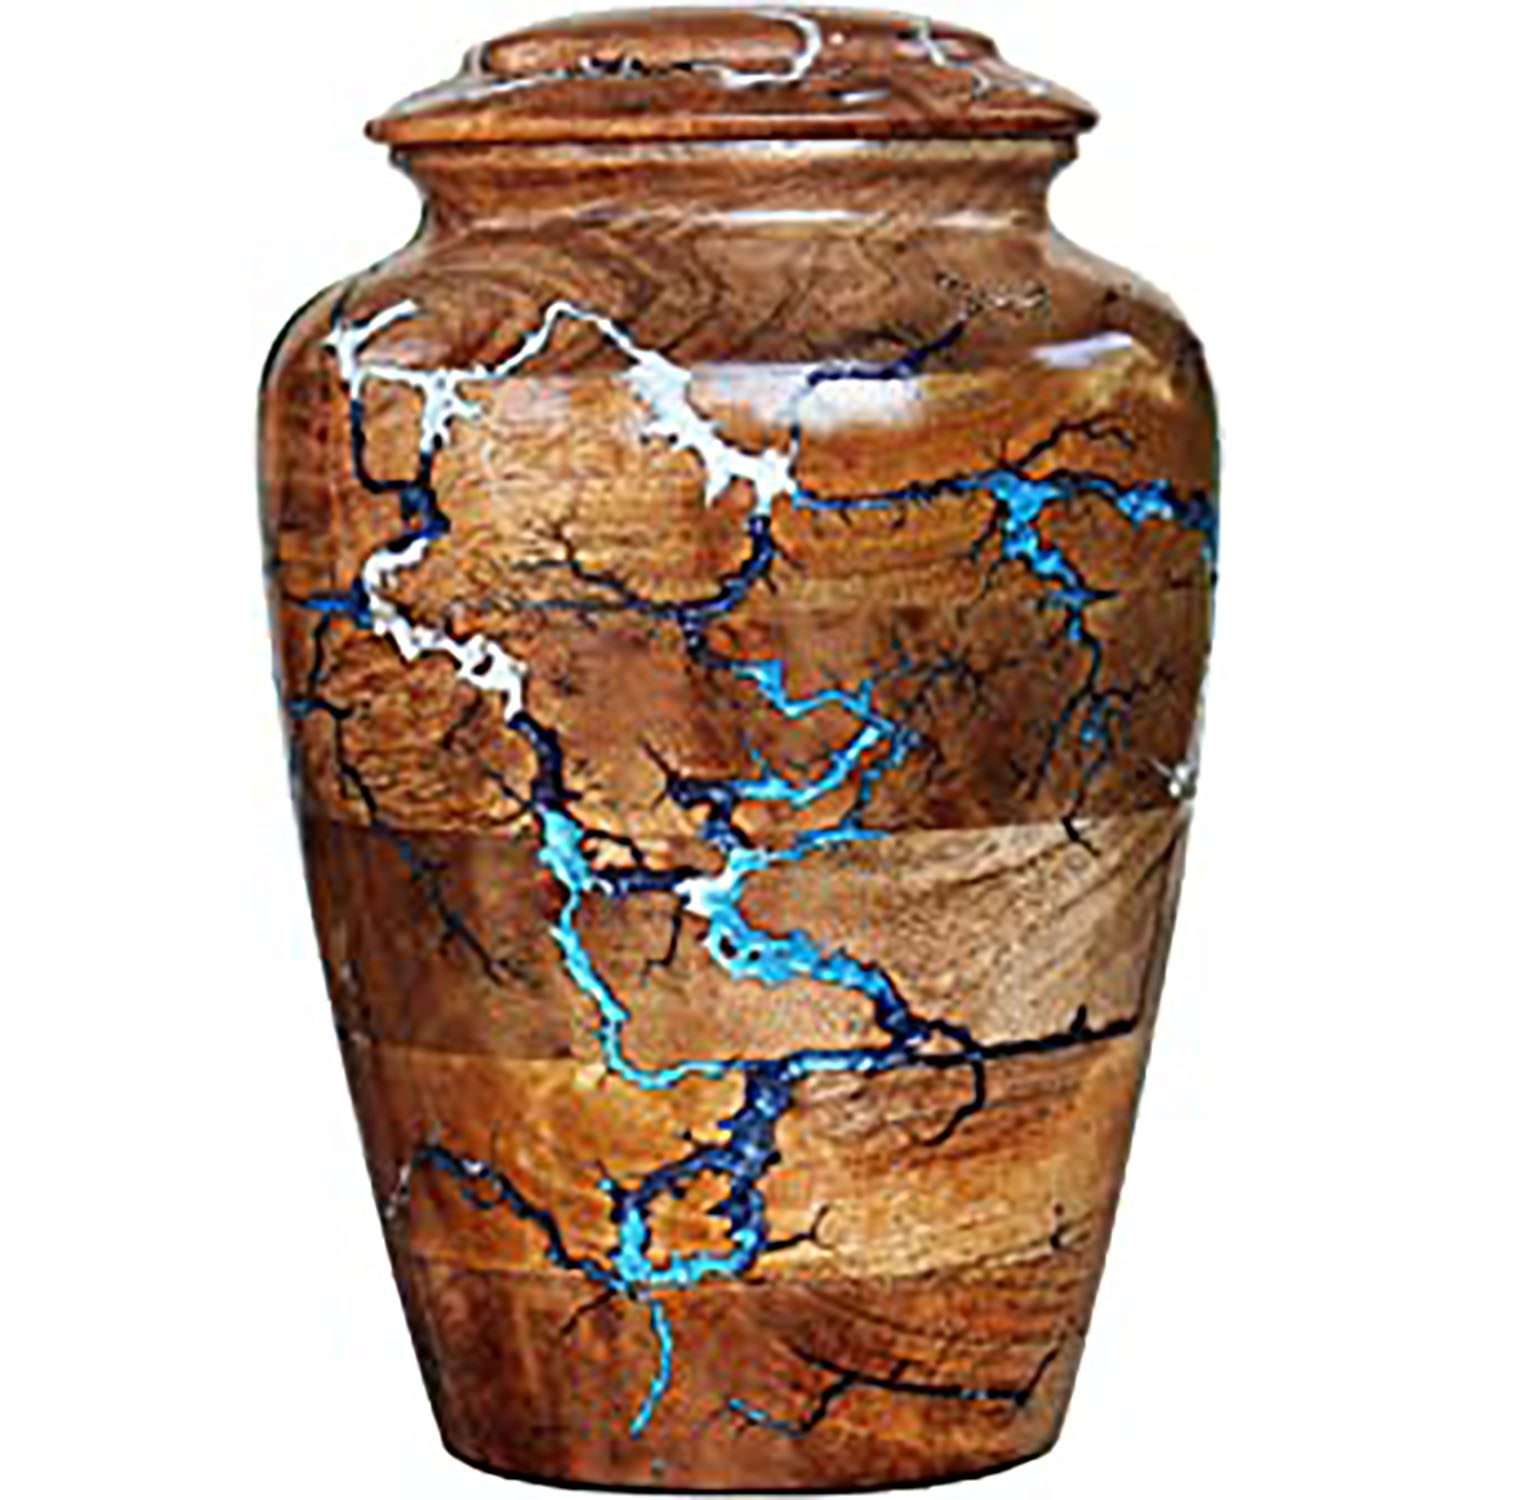 Wooden Burning Urn For Human Ashes| Thunder Storm Design Cremation Urn for Ashes